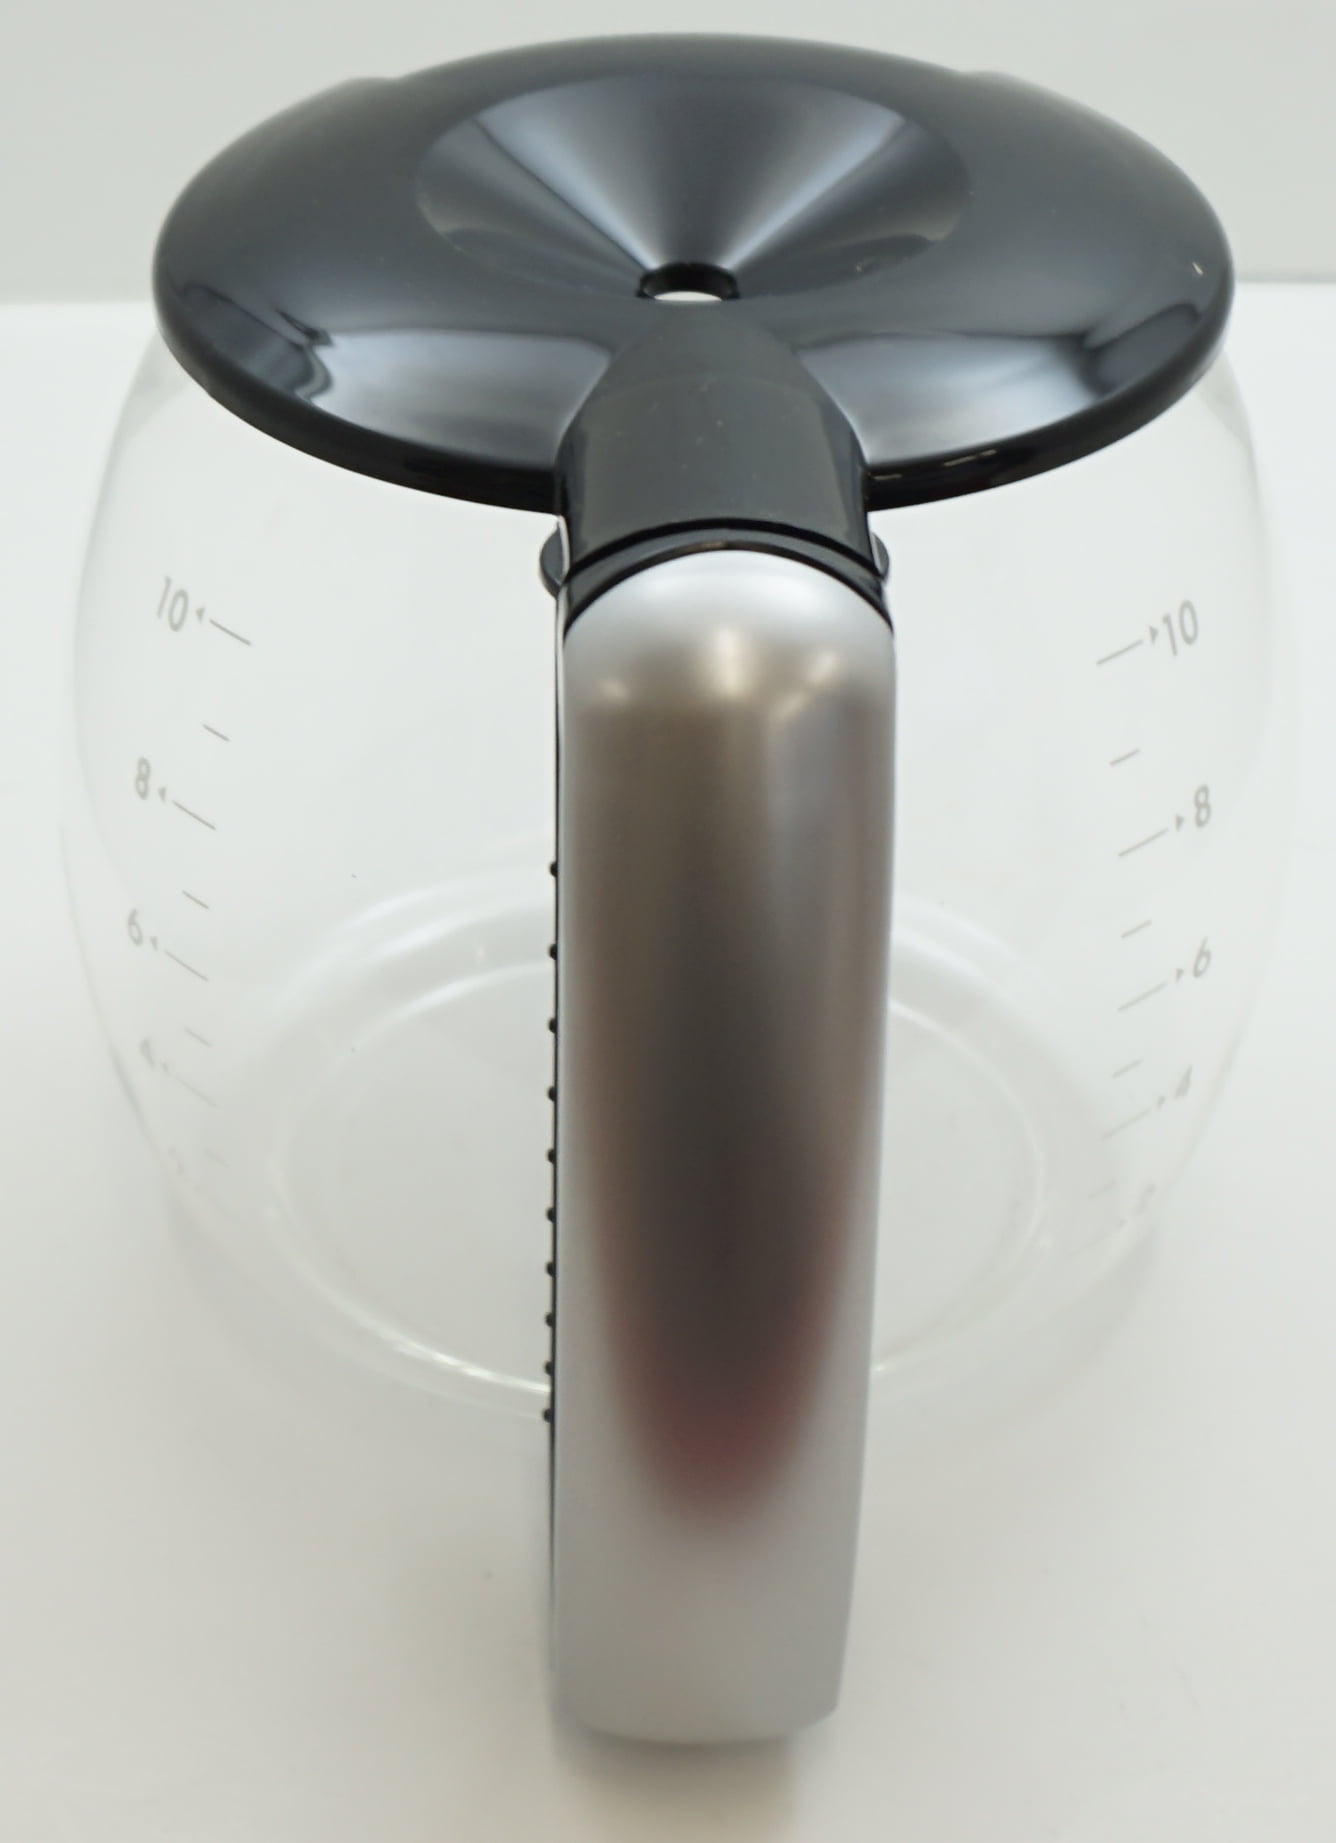 Eetrite Coffee Plunger Borosilicate Glass 800ML ERP8000BK for Sale ✔️  Lowest Price Guaranteed